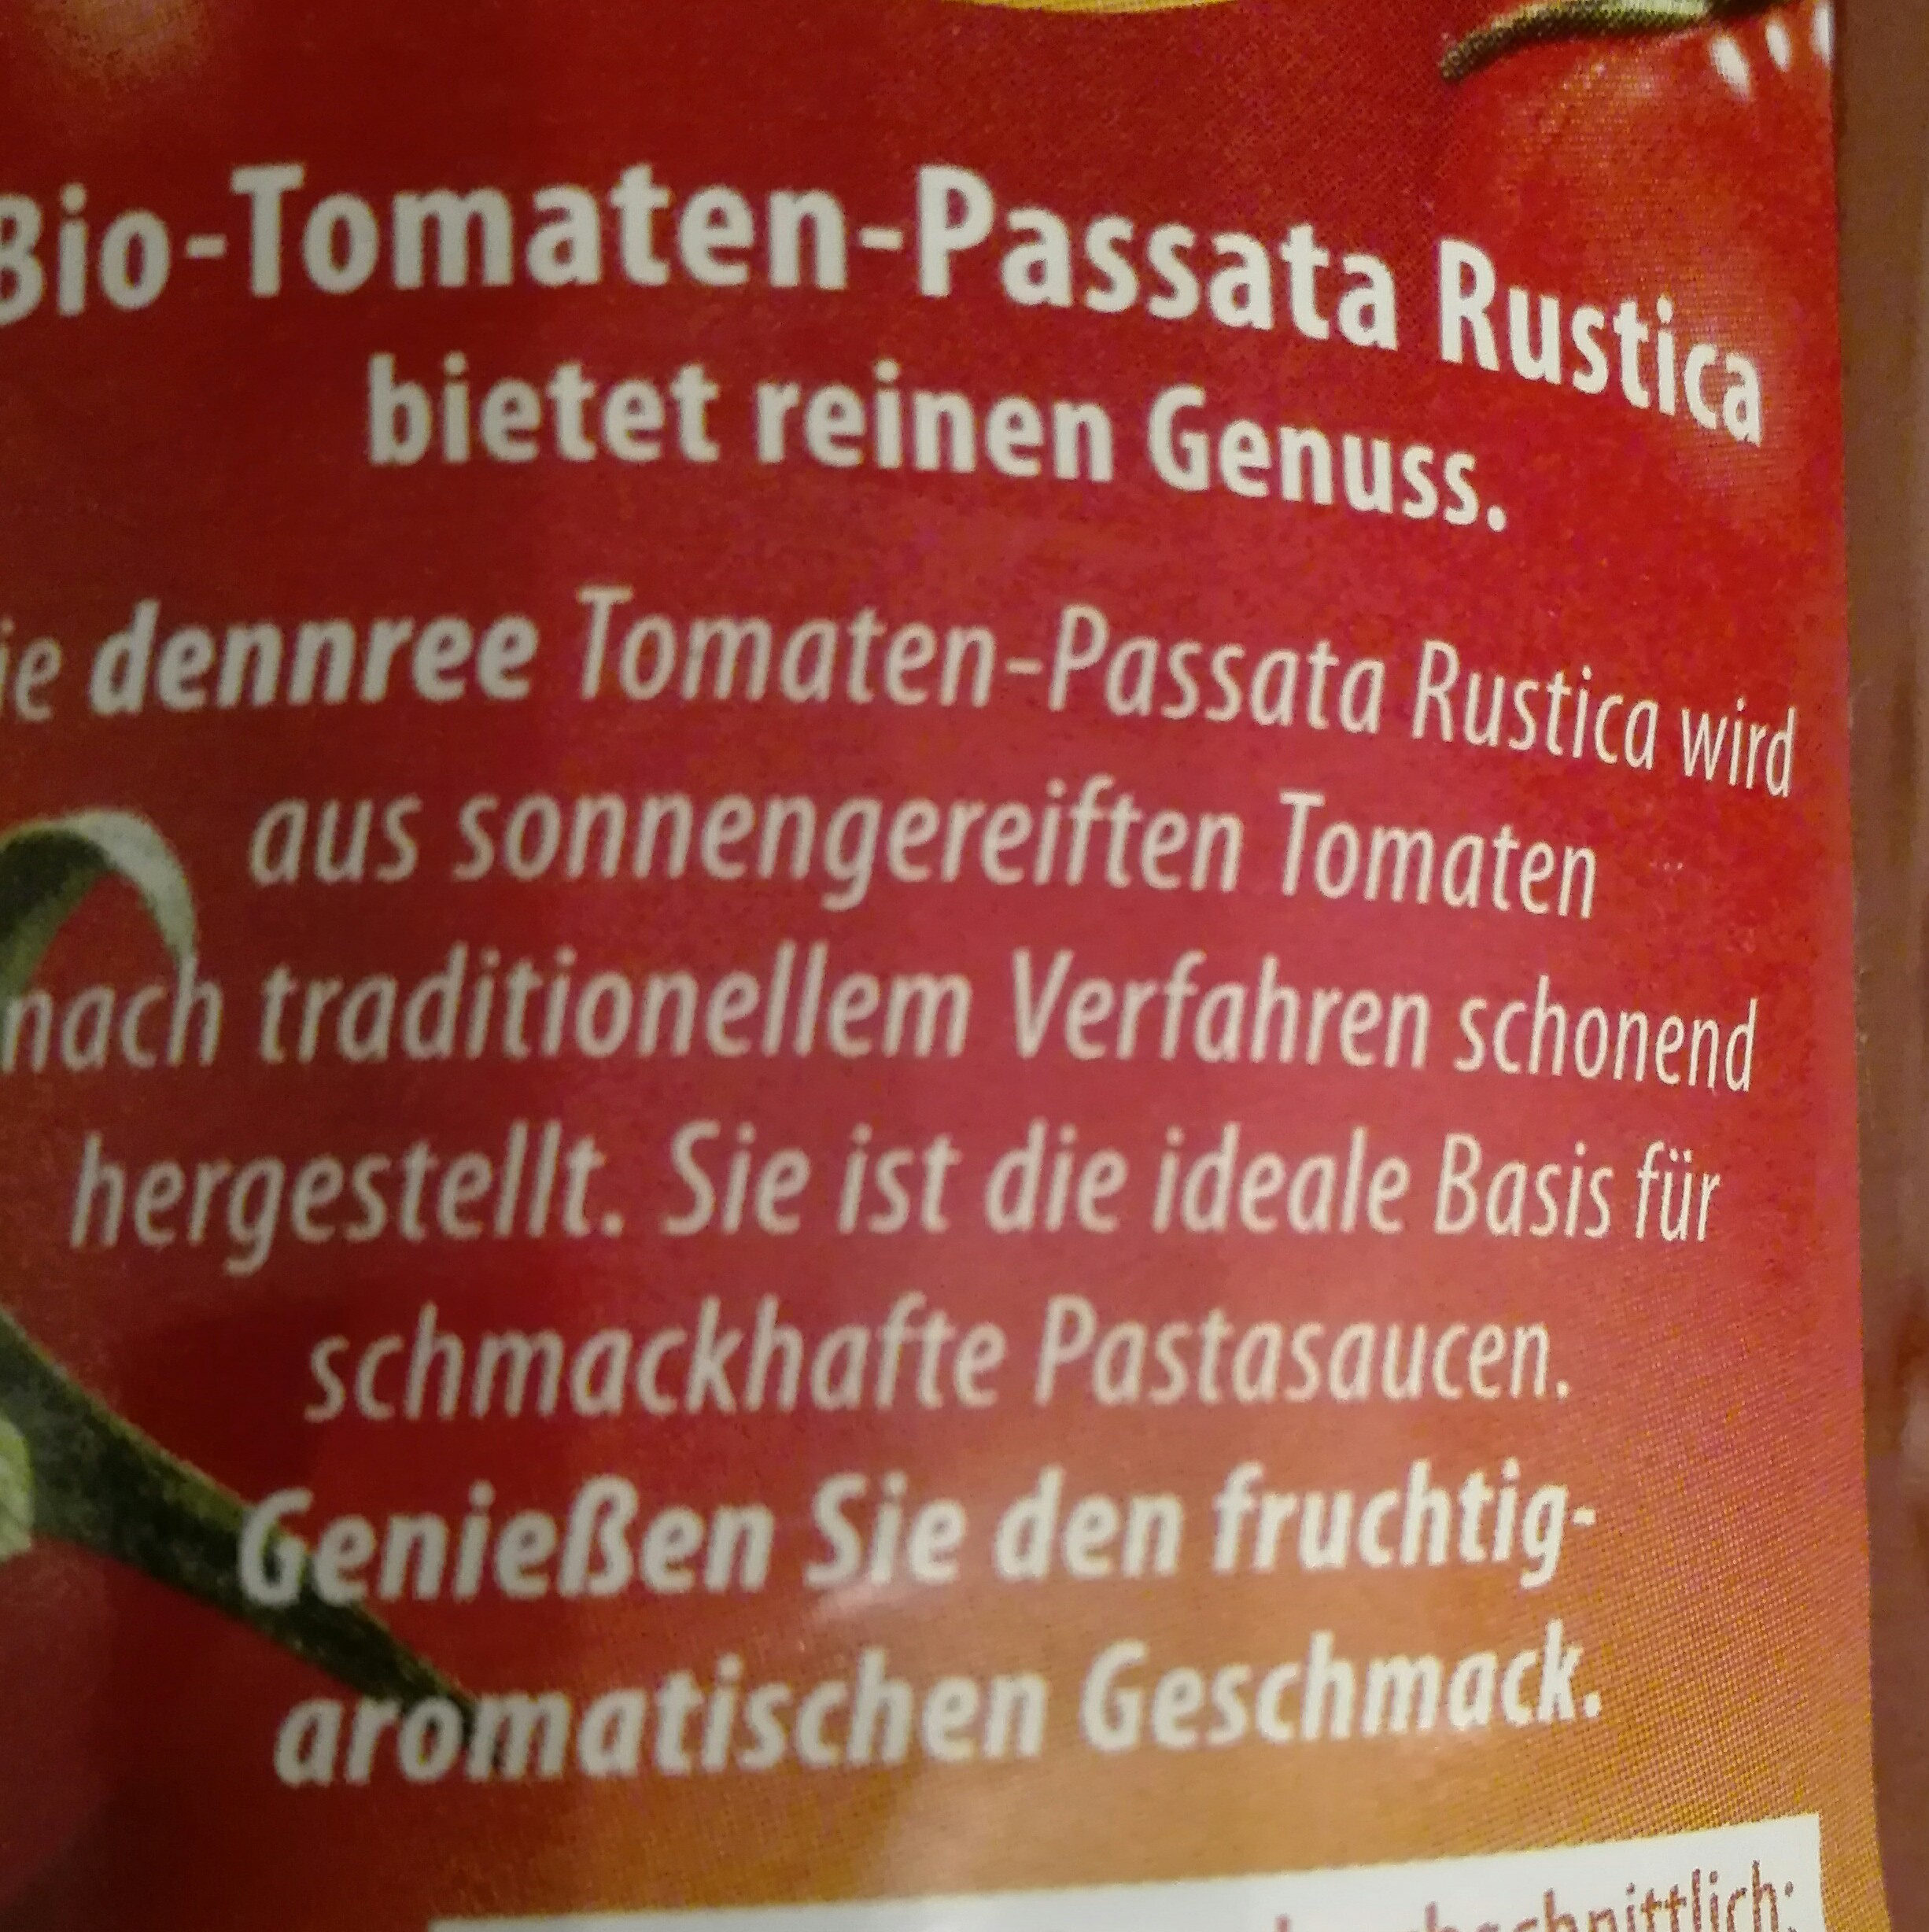 Tomaten-Passata Rustica - Zutaten